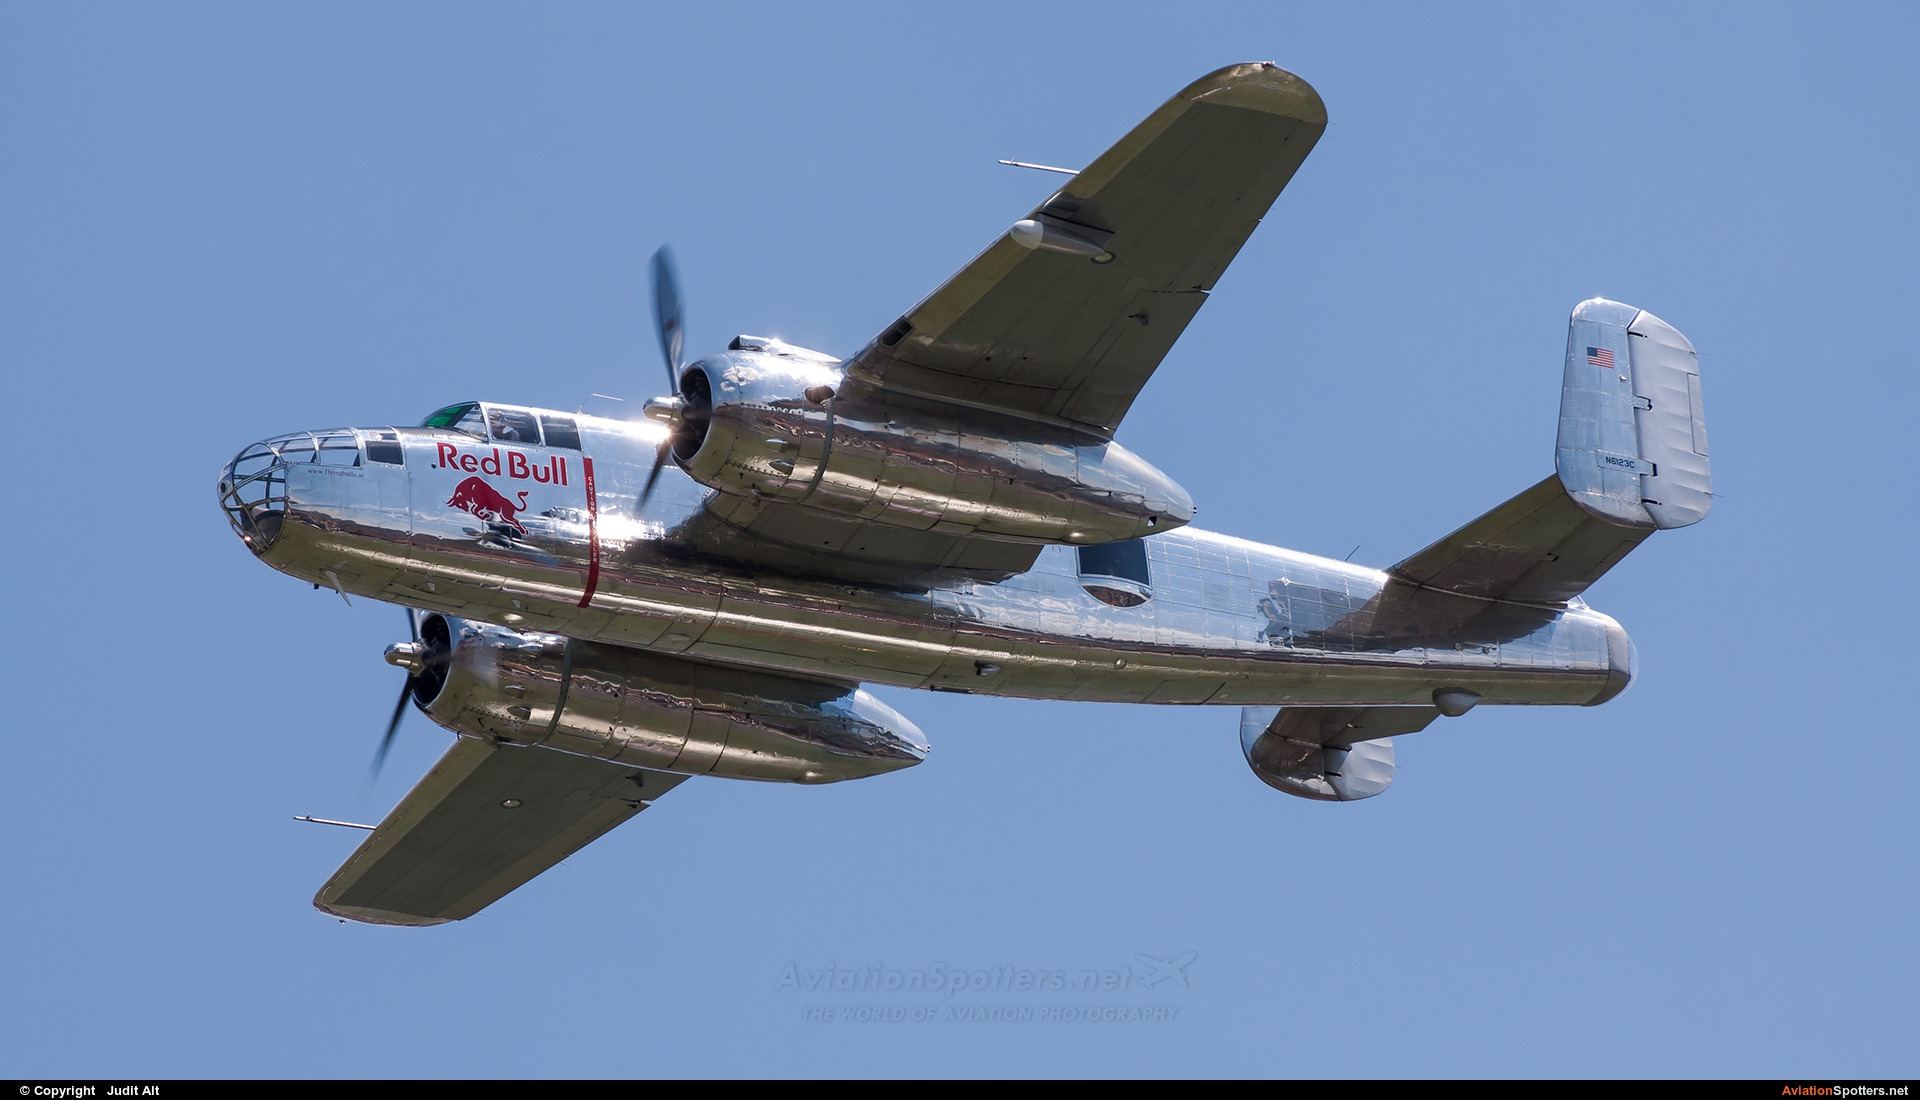 The Flying Bulls  -  B-25J Mitchell  (N6123C) By Judit Alt (Judit)